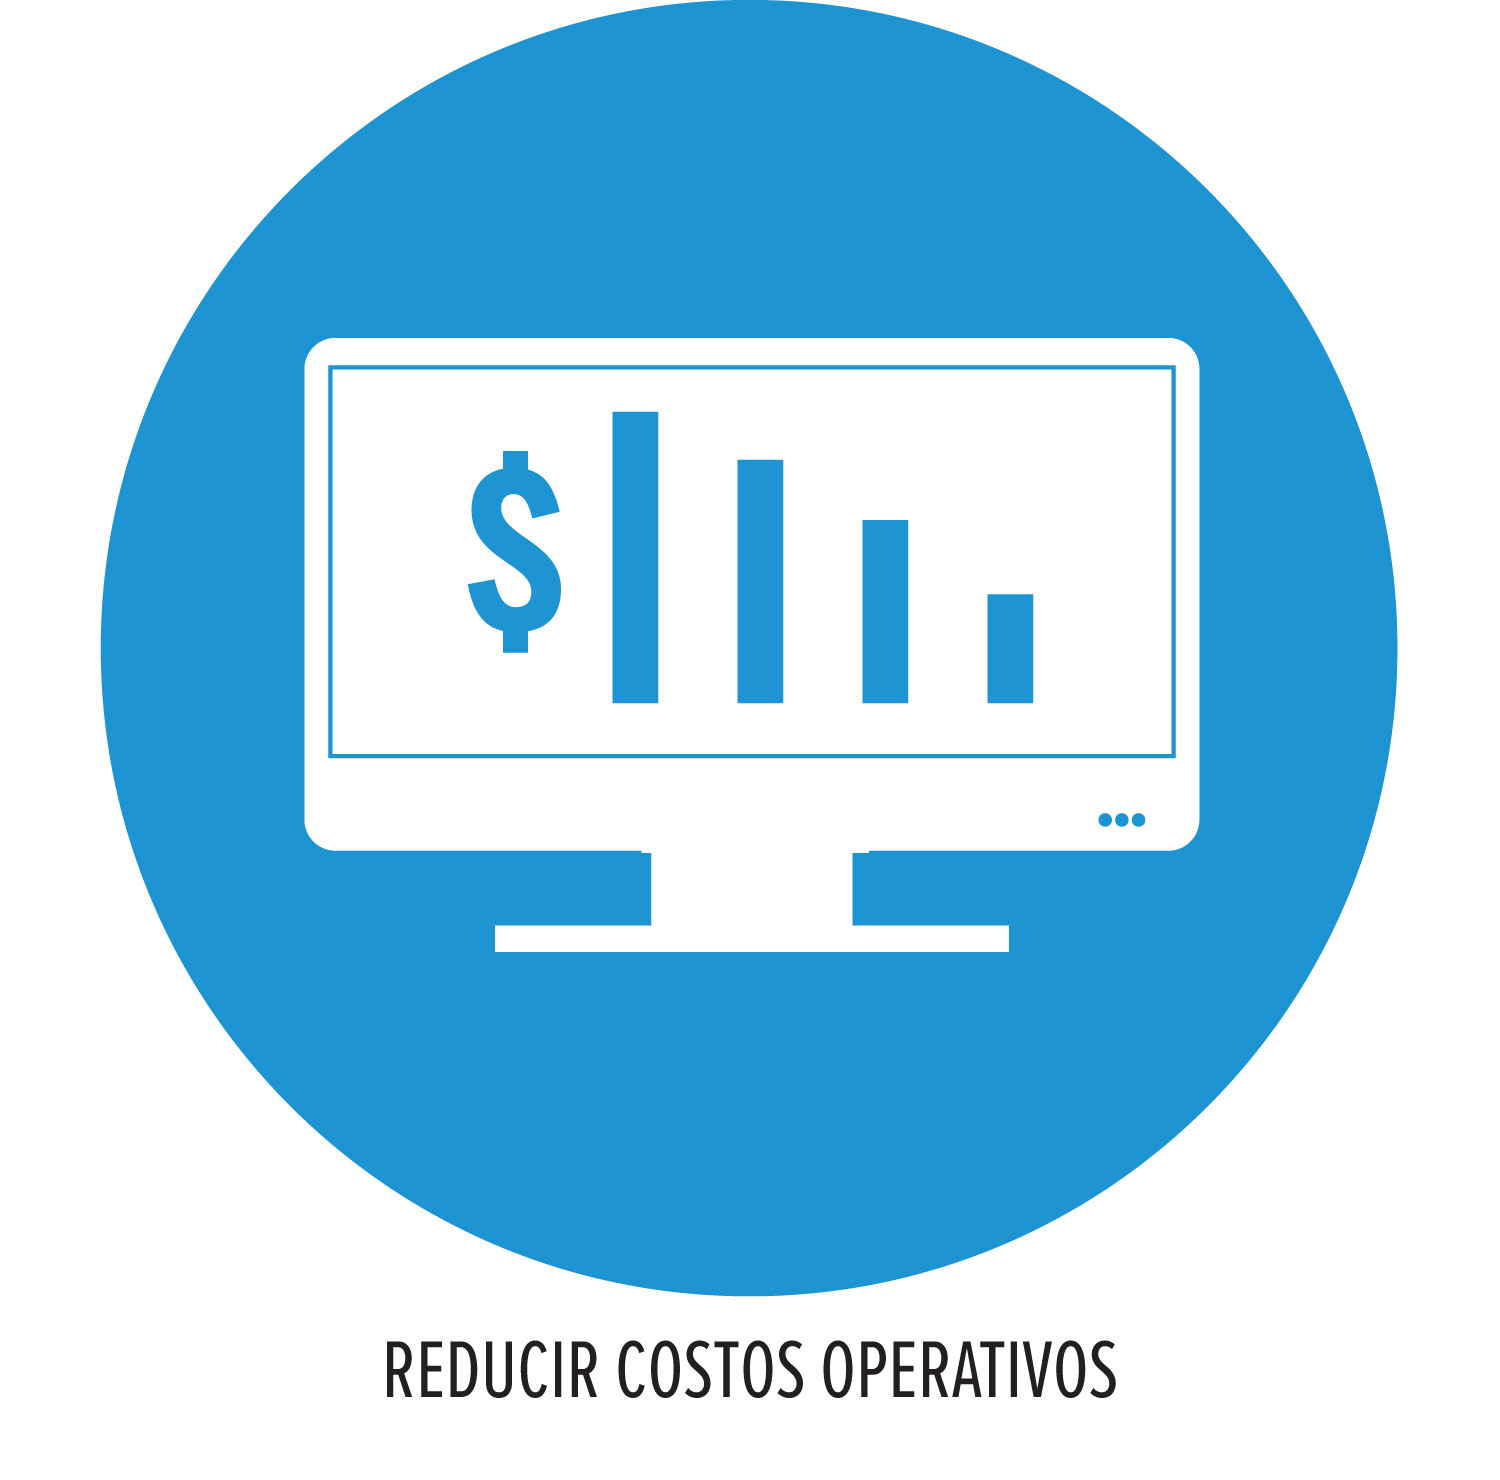 operating_cost-SPANISH